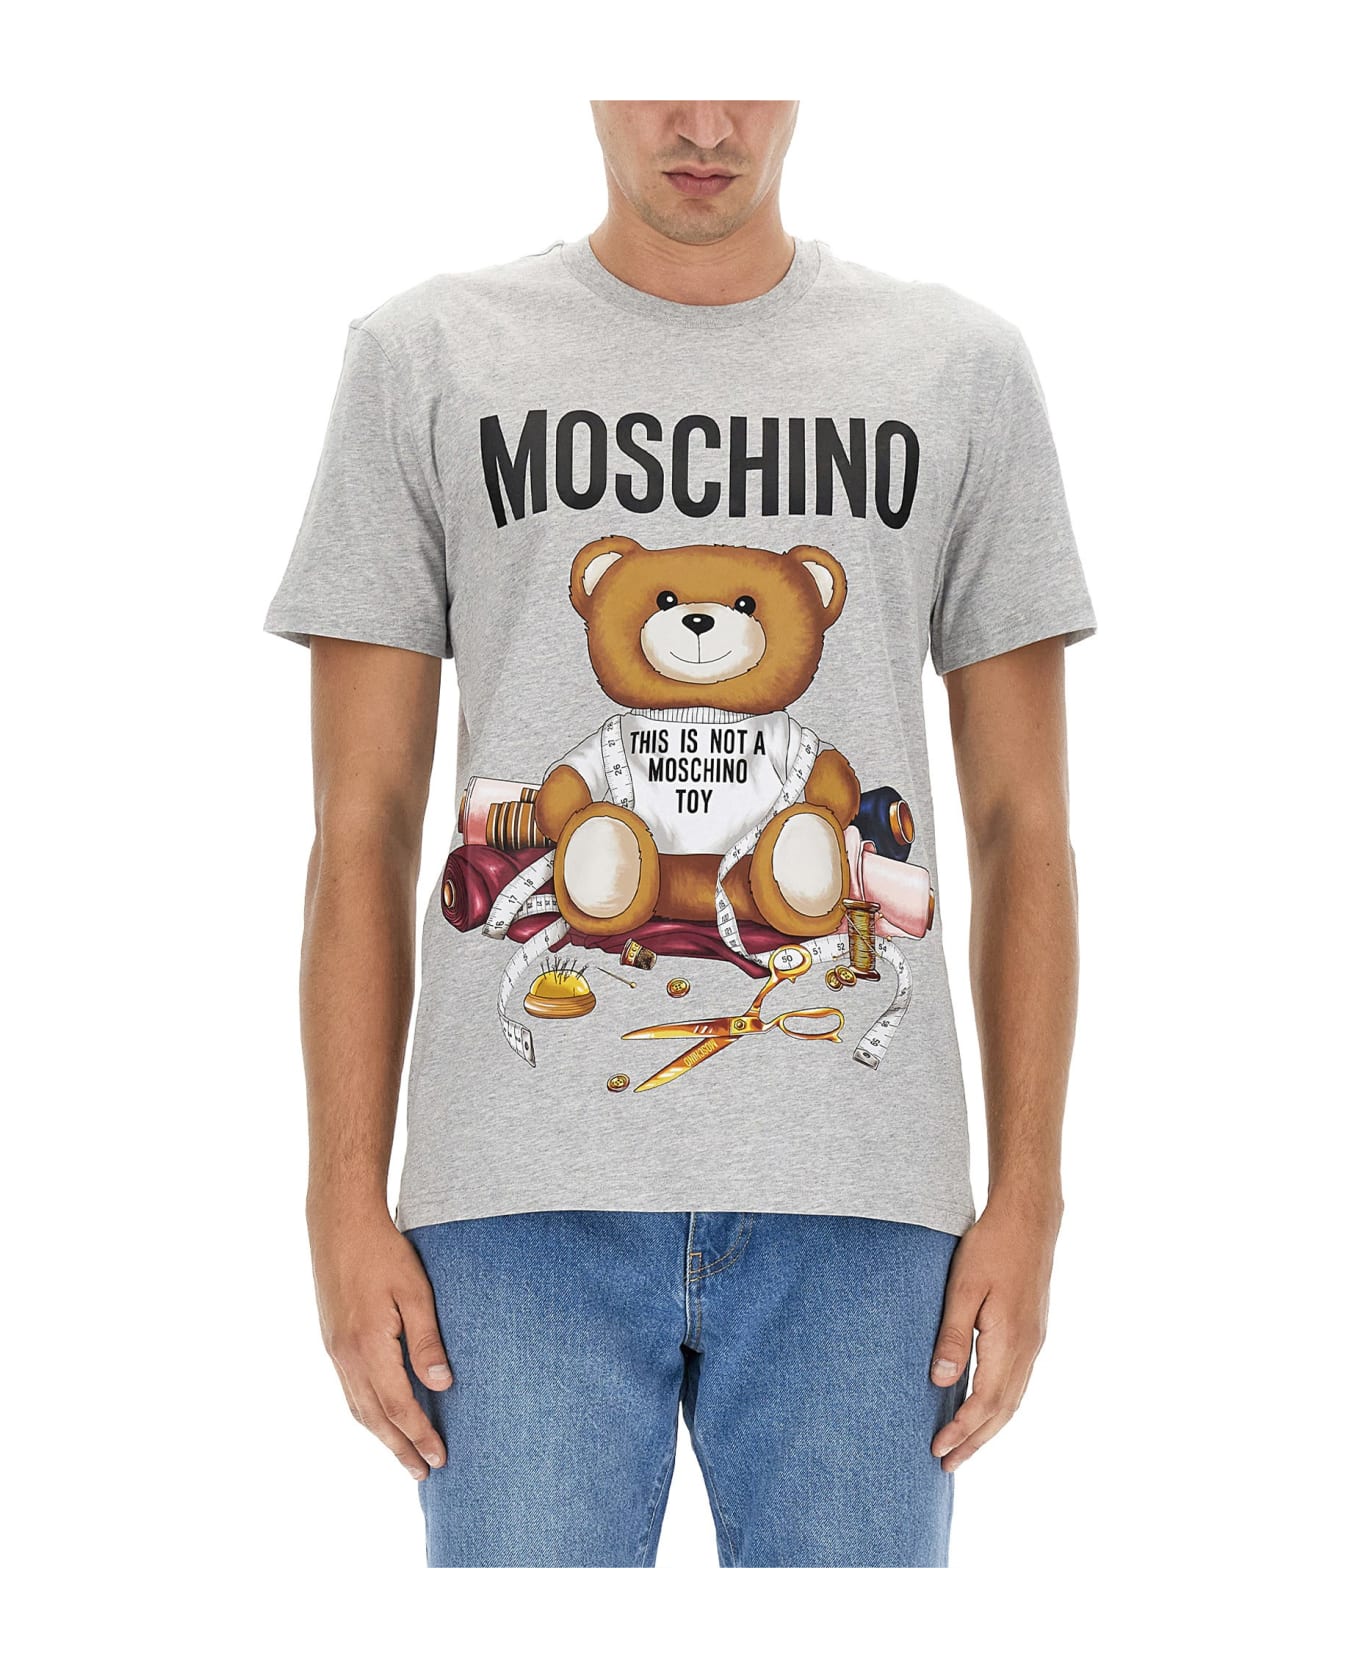 Moschino Teddy Bear T-shirt - 1485